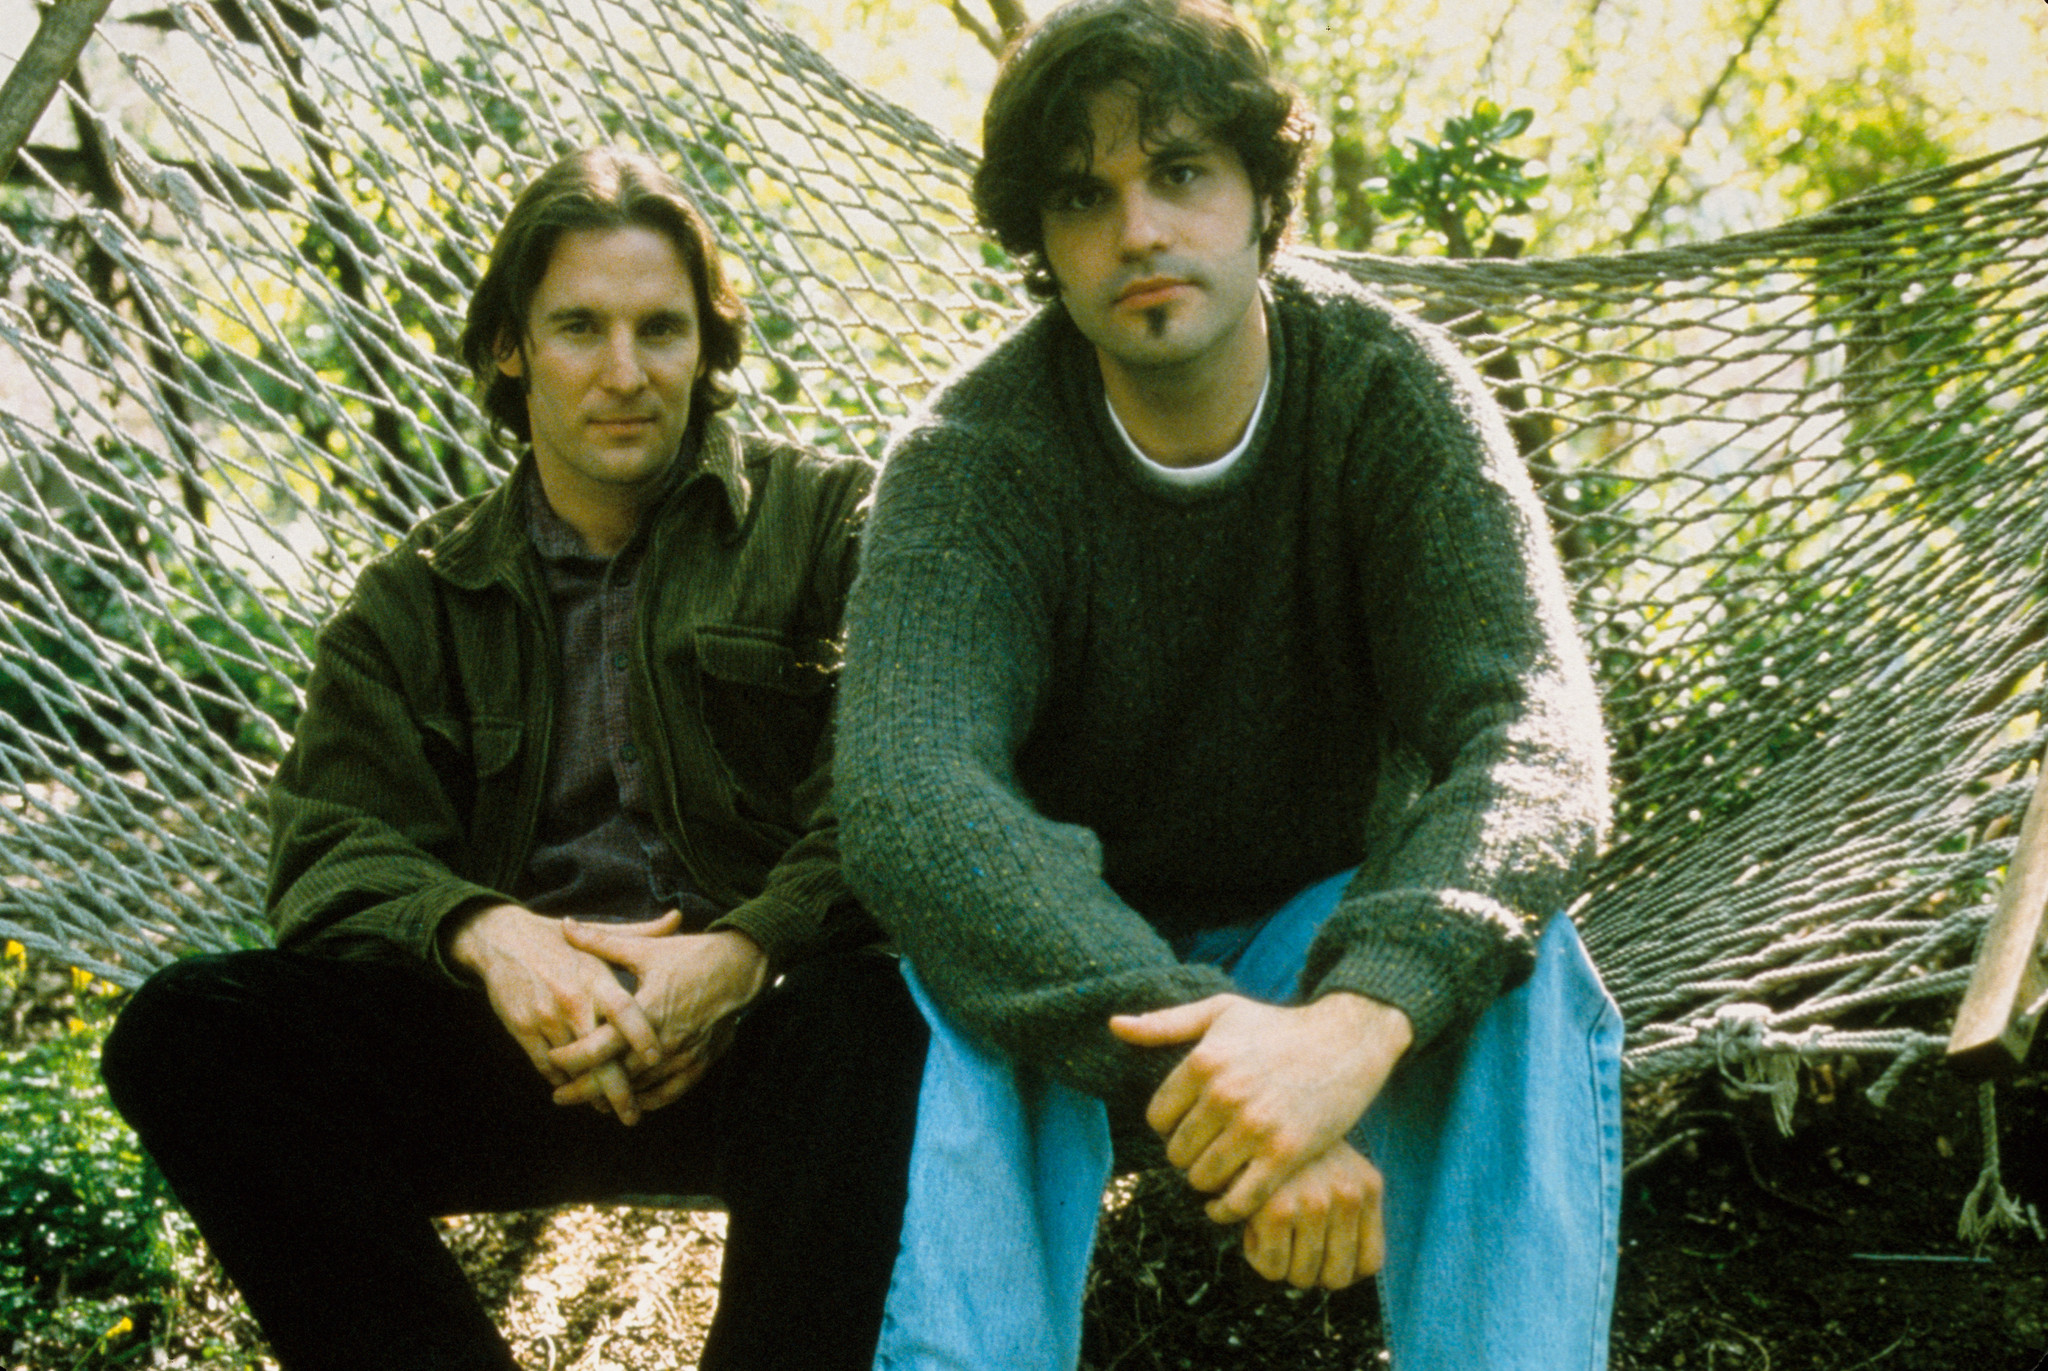 Daniel Myrick and Eduardo Sánchez in The Blair Witch Project (1999)